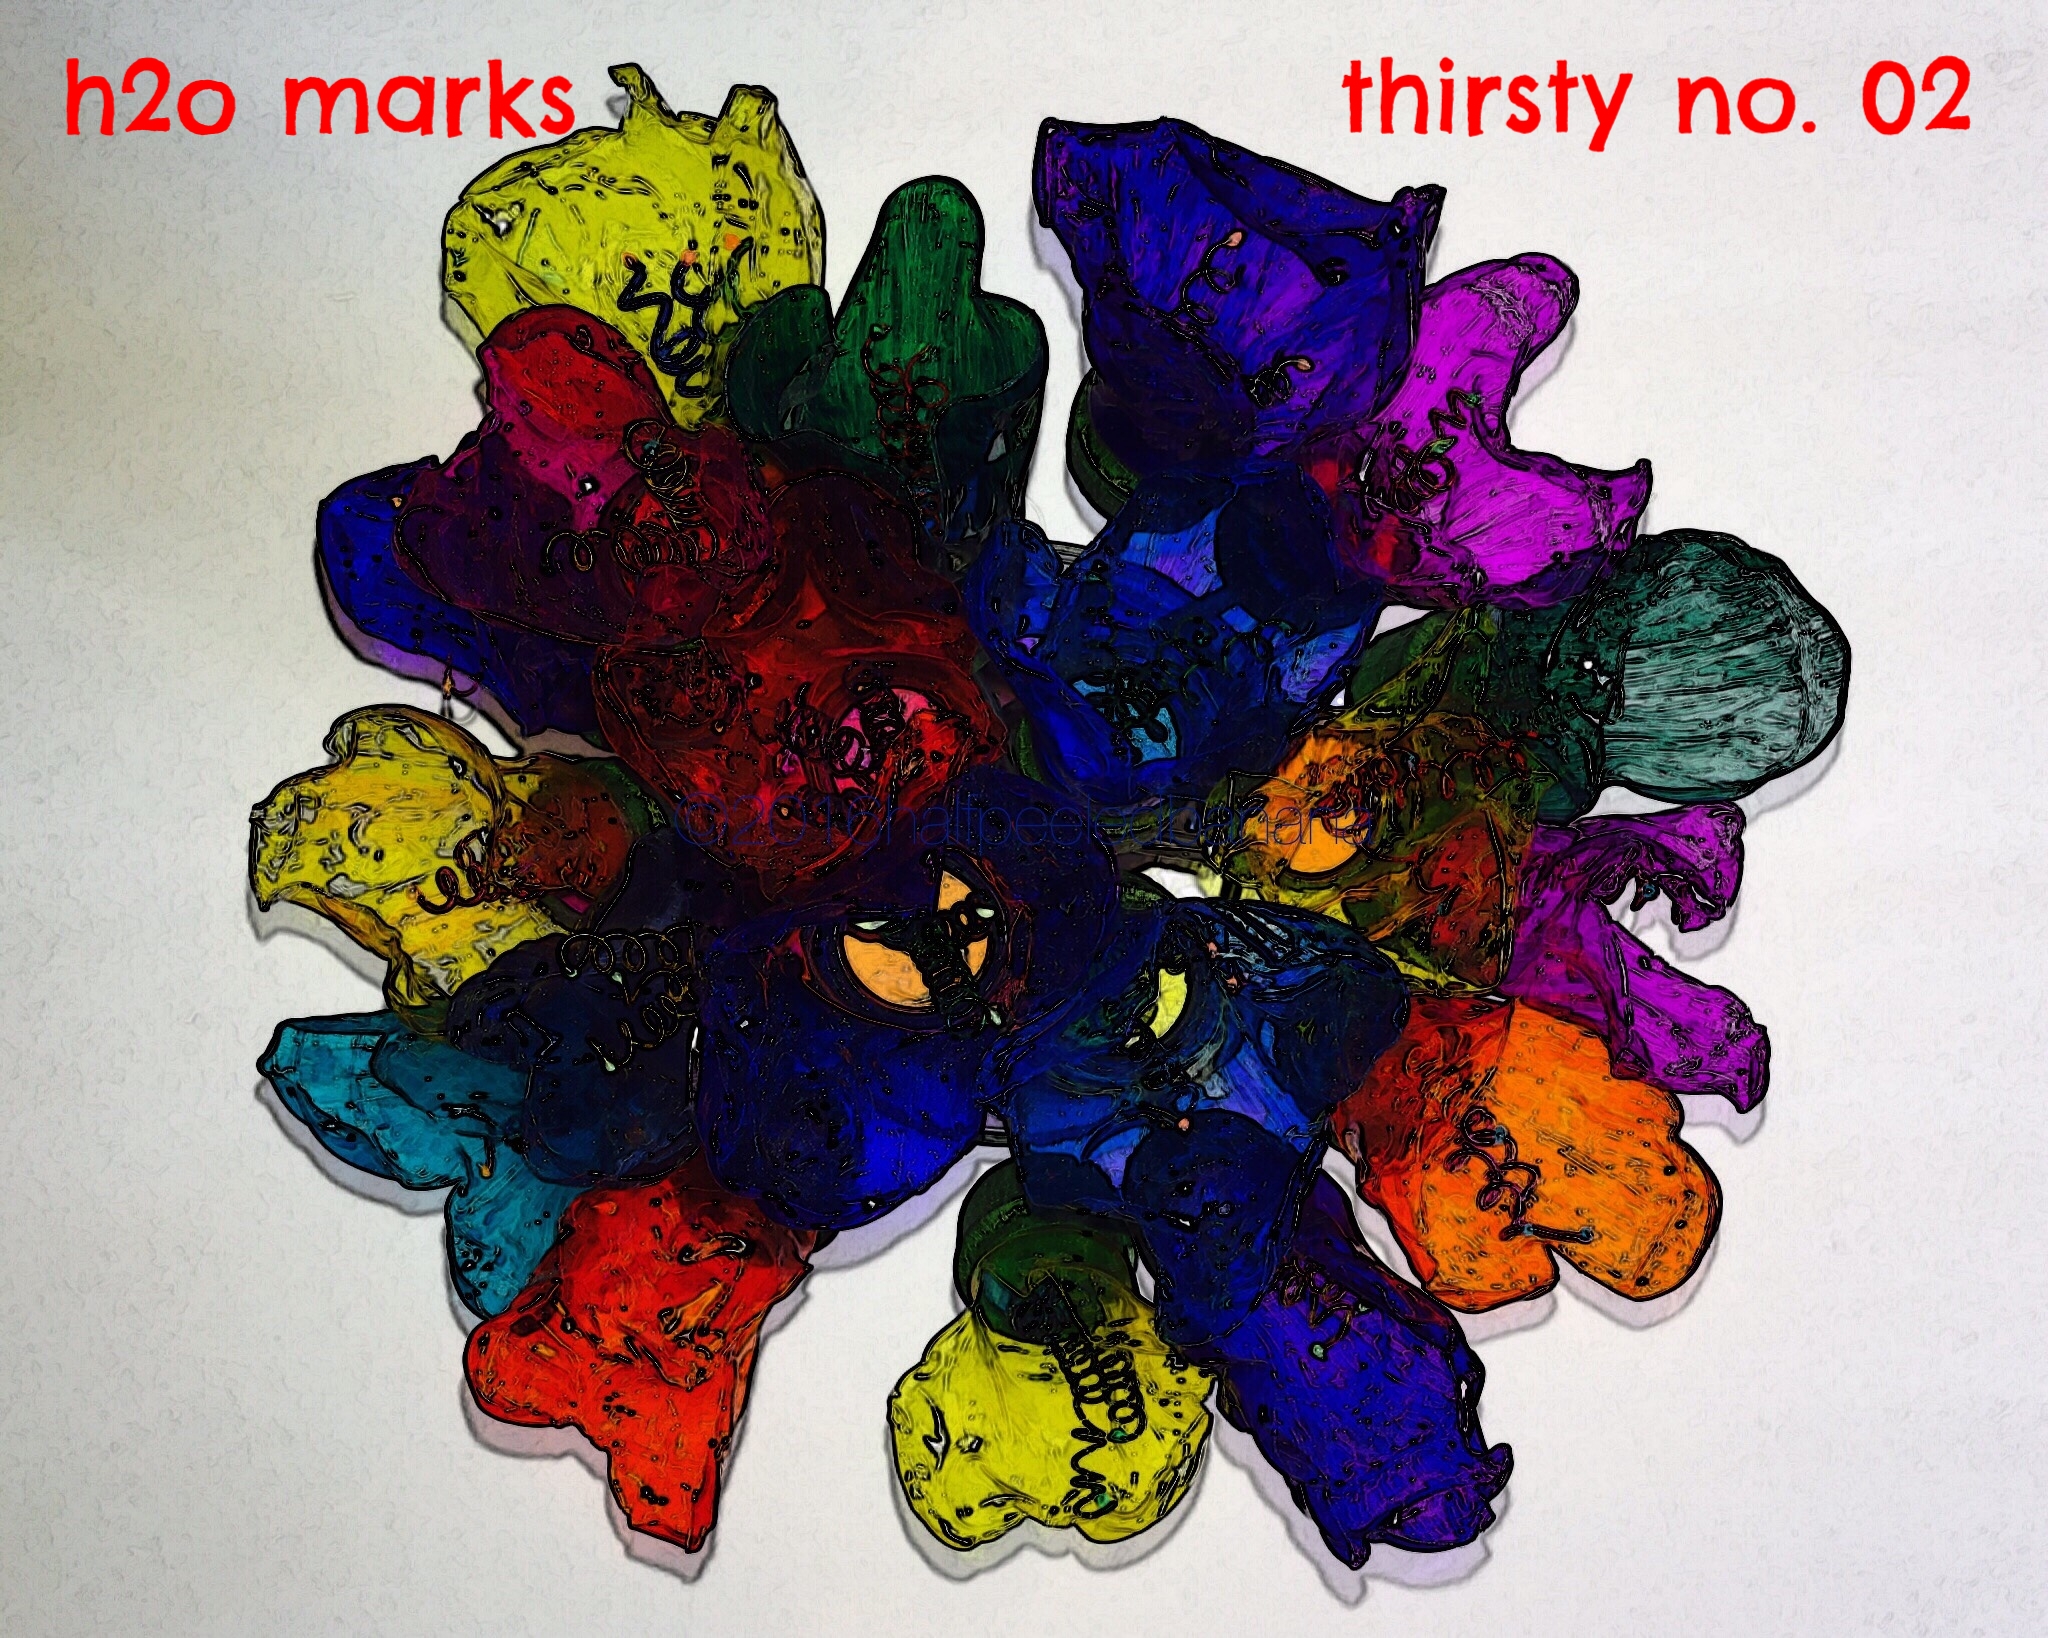 h2o marks - thirsty print no. 02